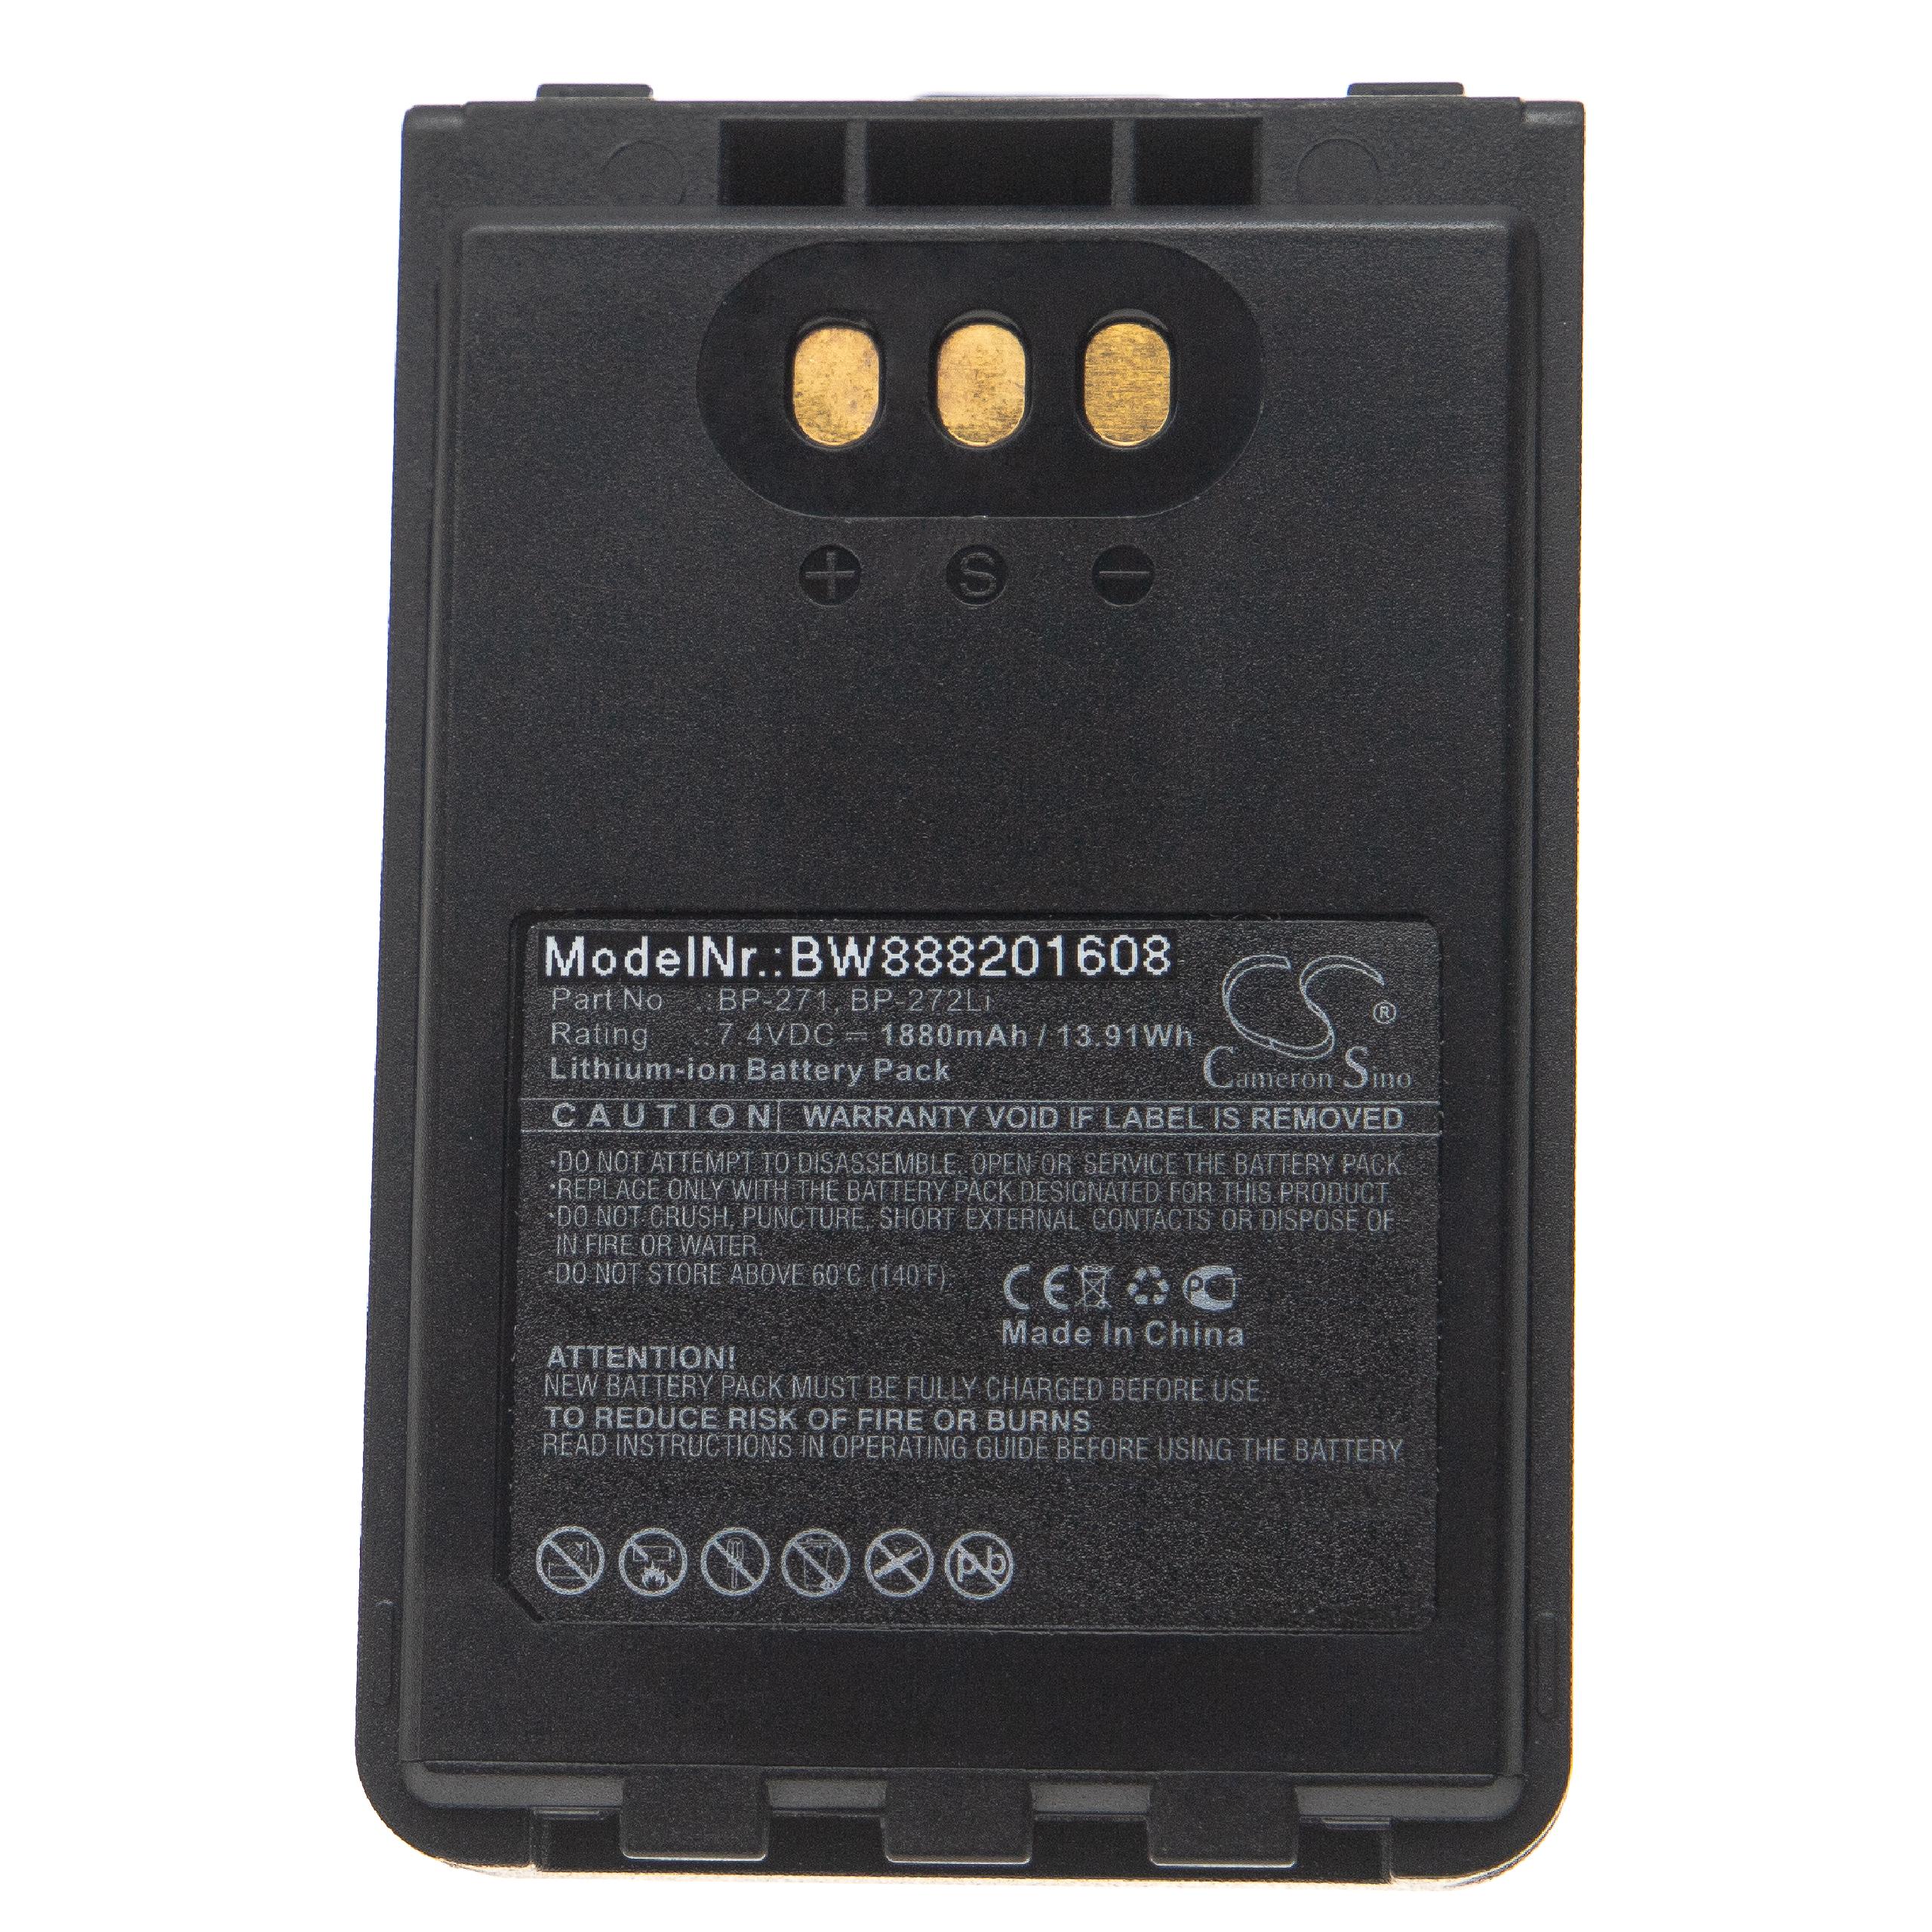 Batteria per dispositivo radio sostituisce Icom BP-271, BP-272Li Icom - 1880mAh 7,4V Li-Ion